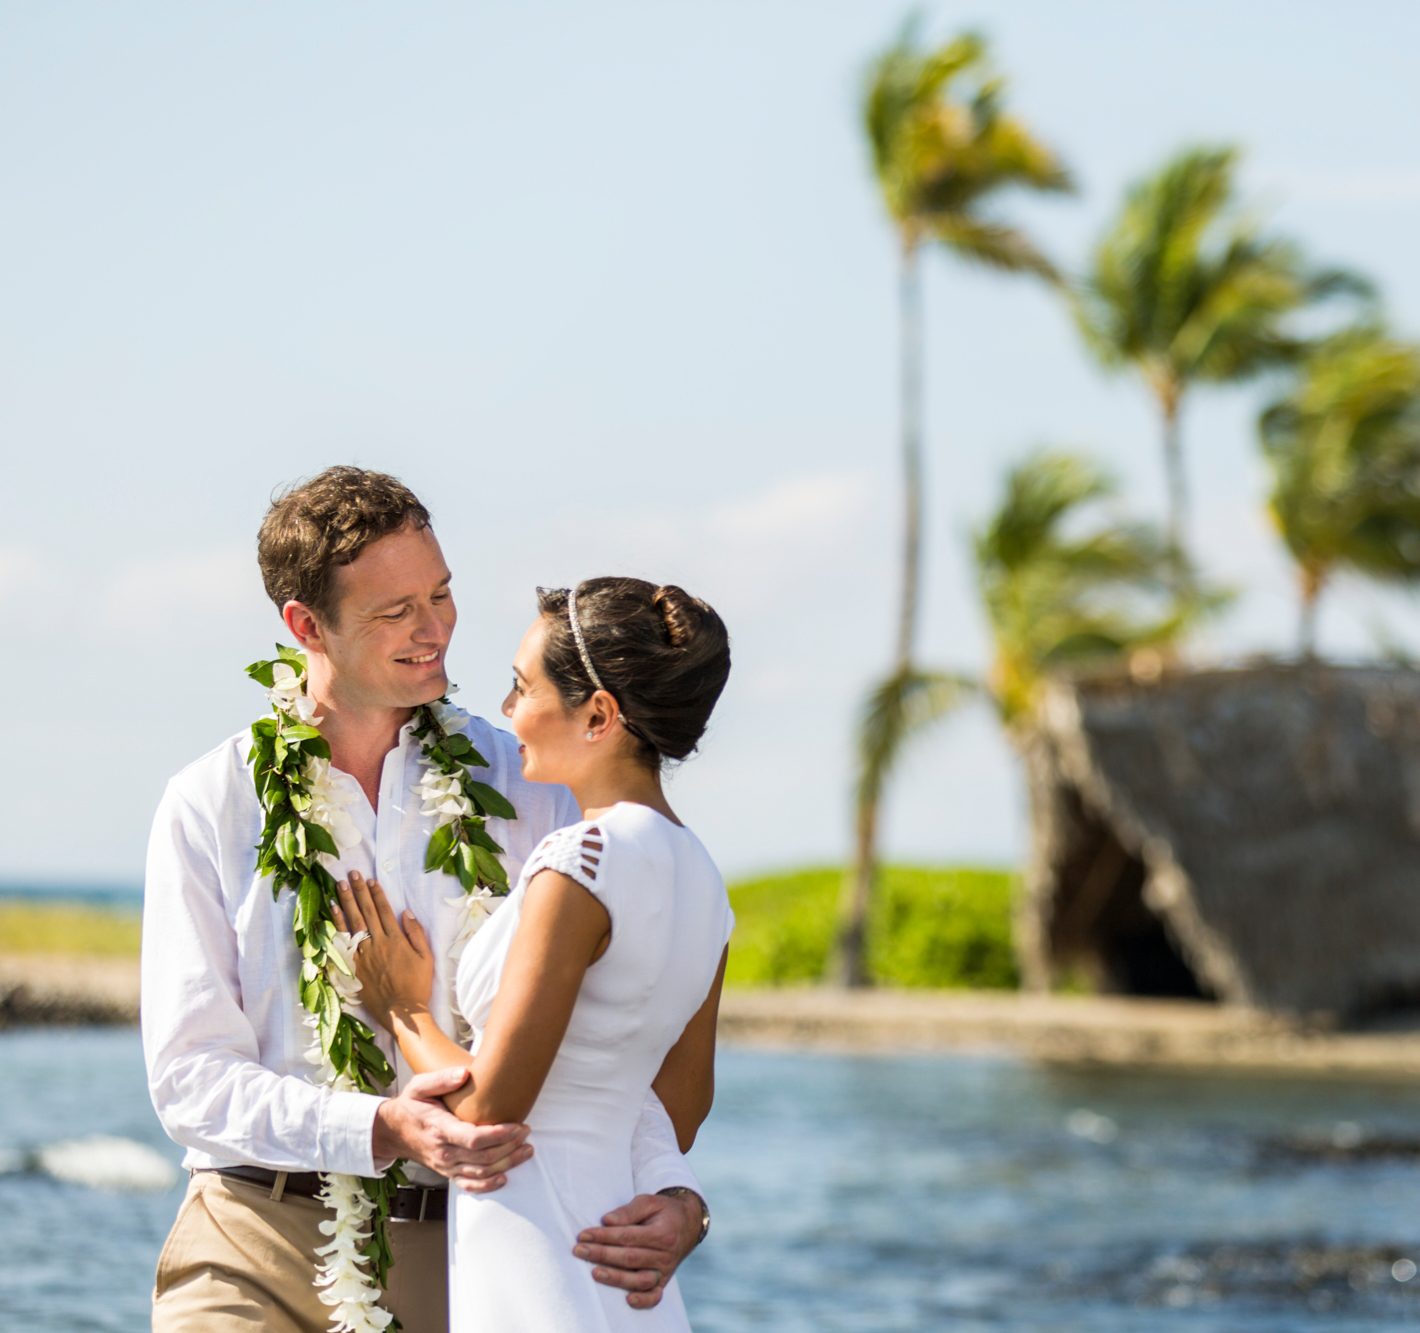 Get Married In Hawaii - Stellar Travel